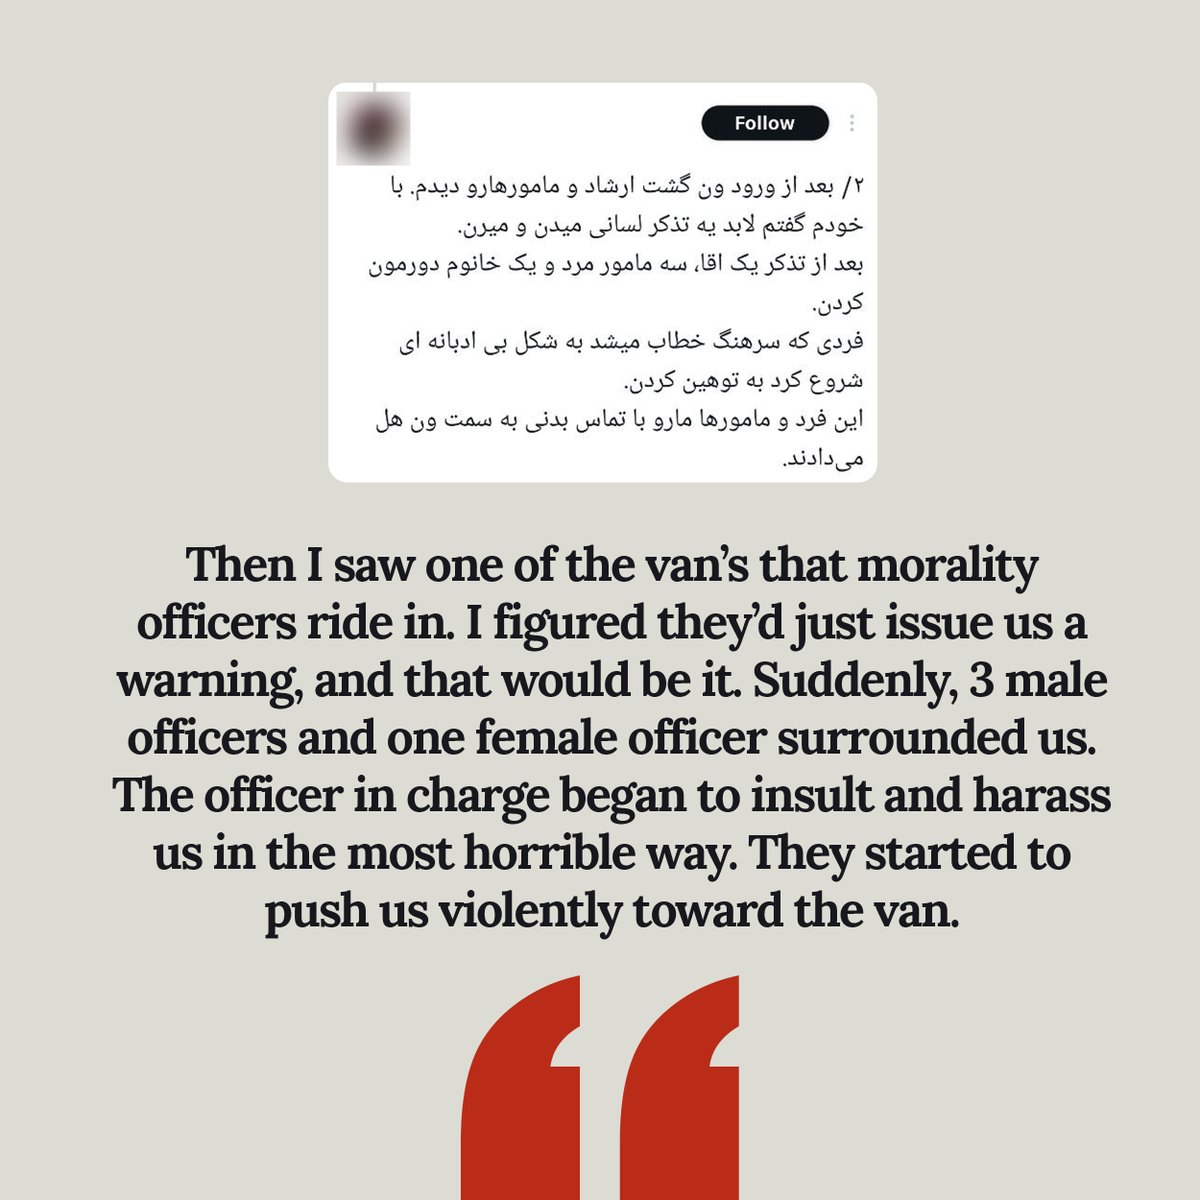 My harrowing encounter with Iran's morality police: a glimpse into the ongoing struggle for women's rights.

#Iran
#MoralityPolice
#WomensRights
#WomanLifeFreedom
#IRGCTerrorists
#WarOnWomen
#گشت_ارشاد
#جنگ_علیه_زنان
#حجاب_اجباری
#زن_زندگی_آزادی